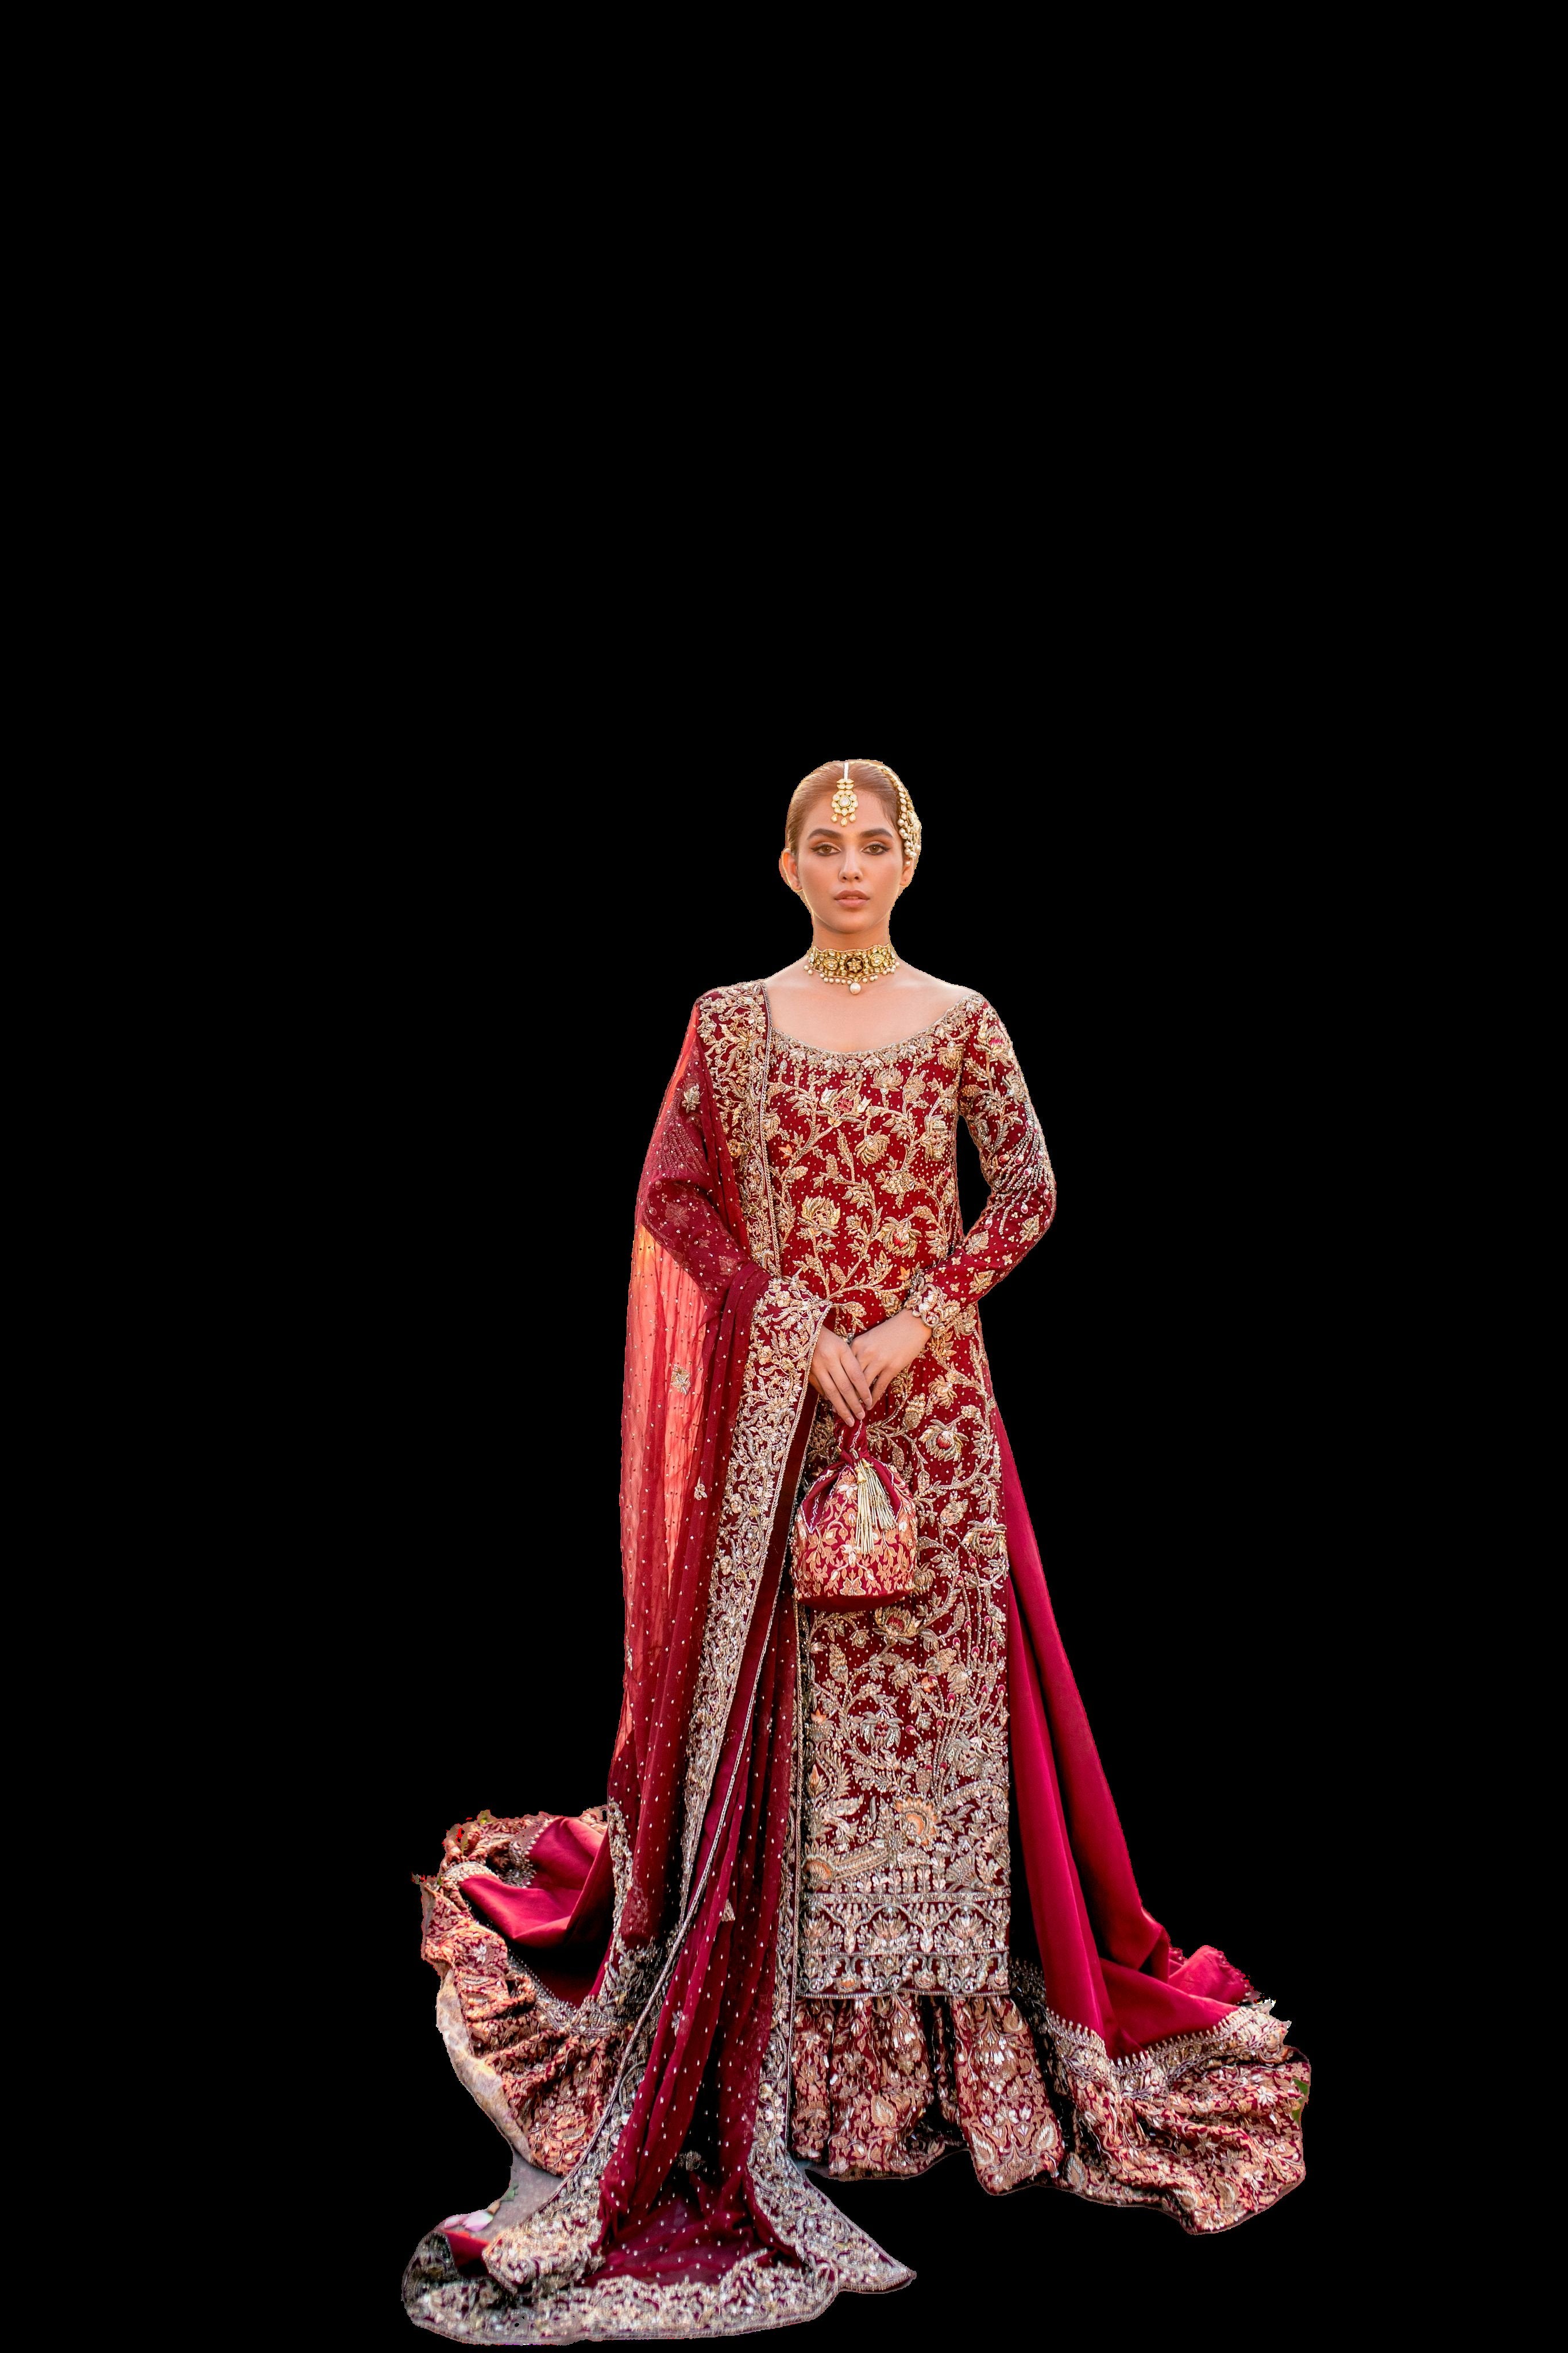 Sky Blue Gown Lehenga for Pakistani Wedding Dresses – Nameera by Farooq